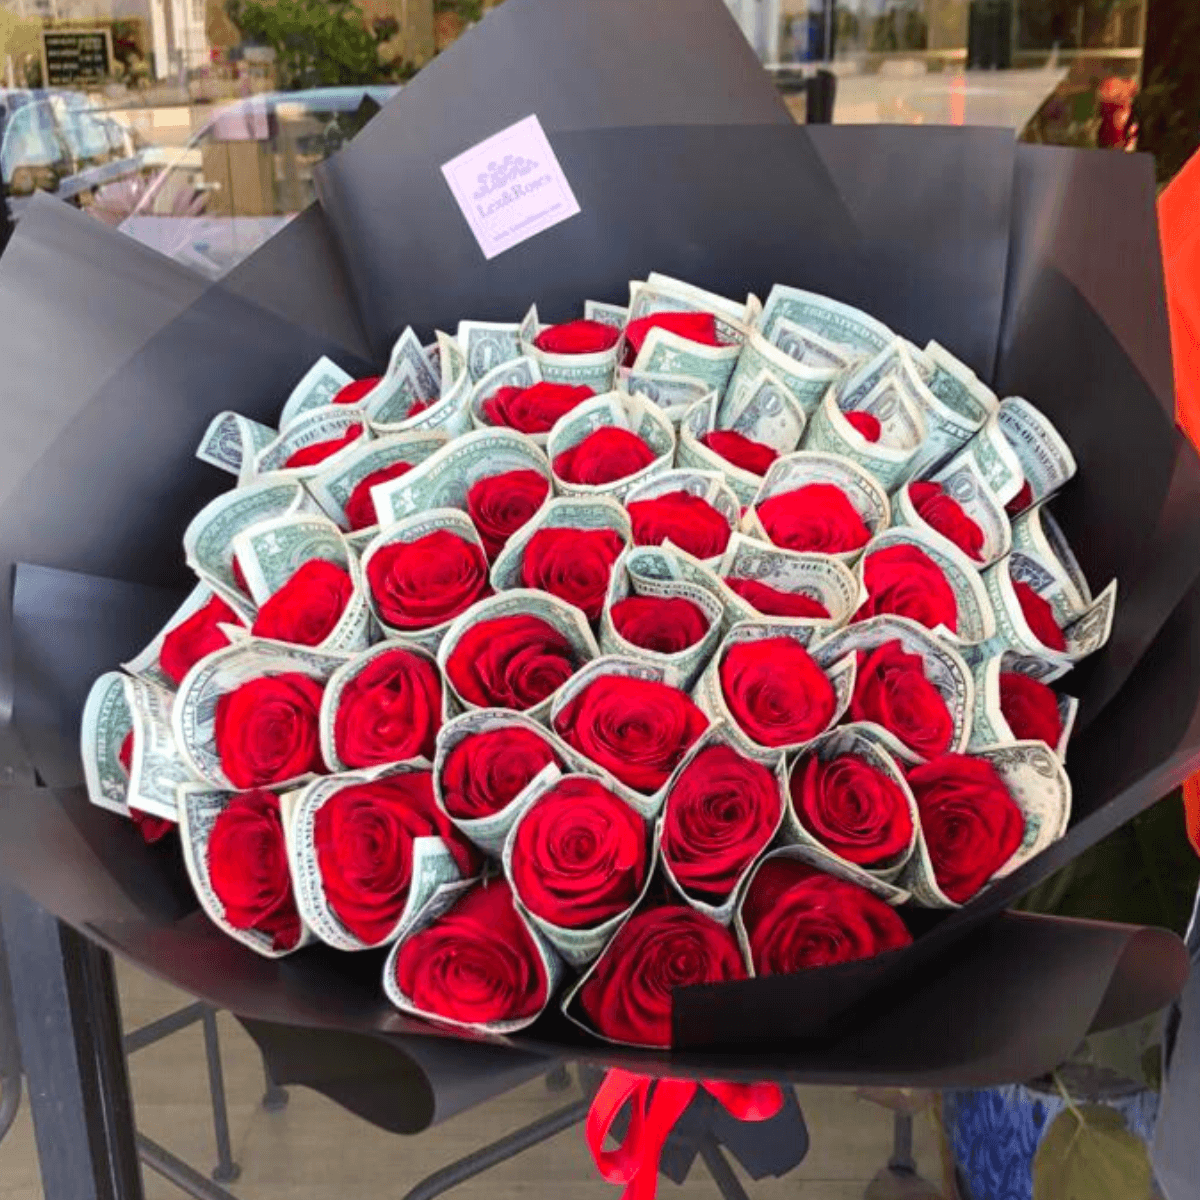 Money Rose Bouquet - Red